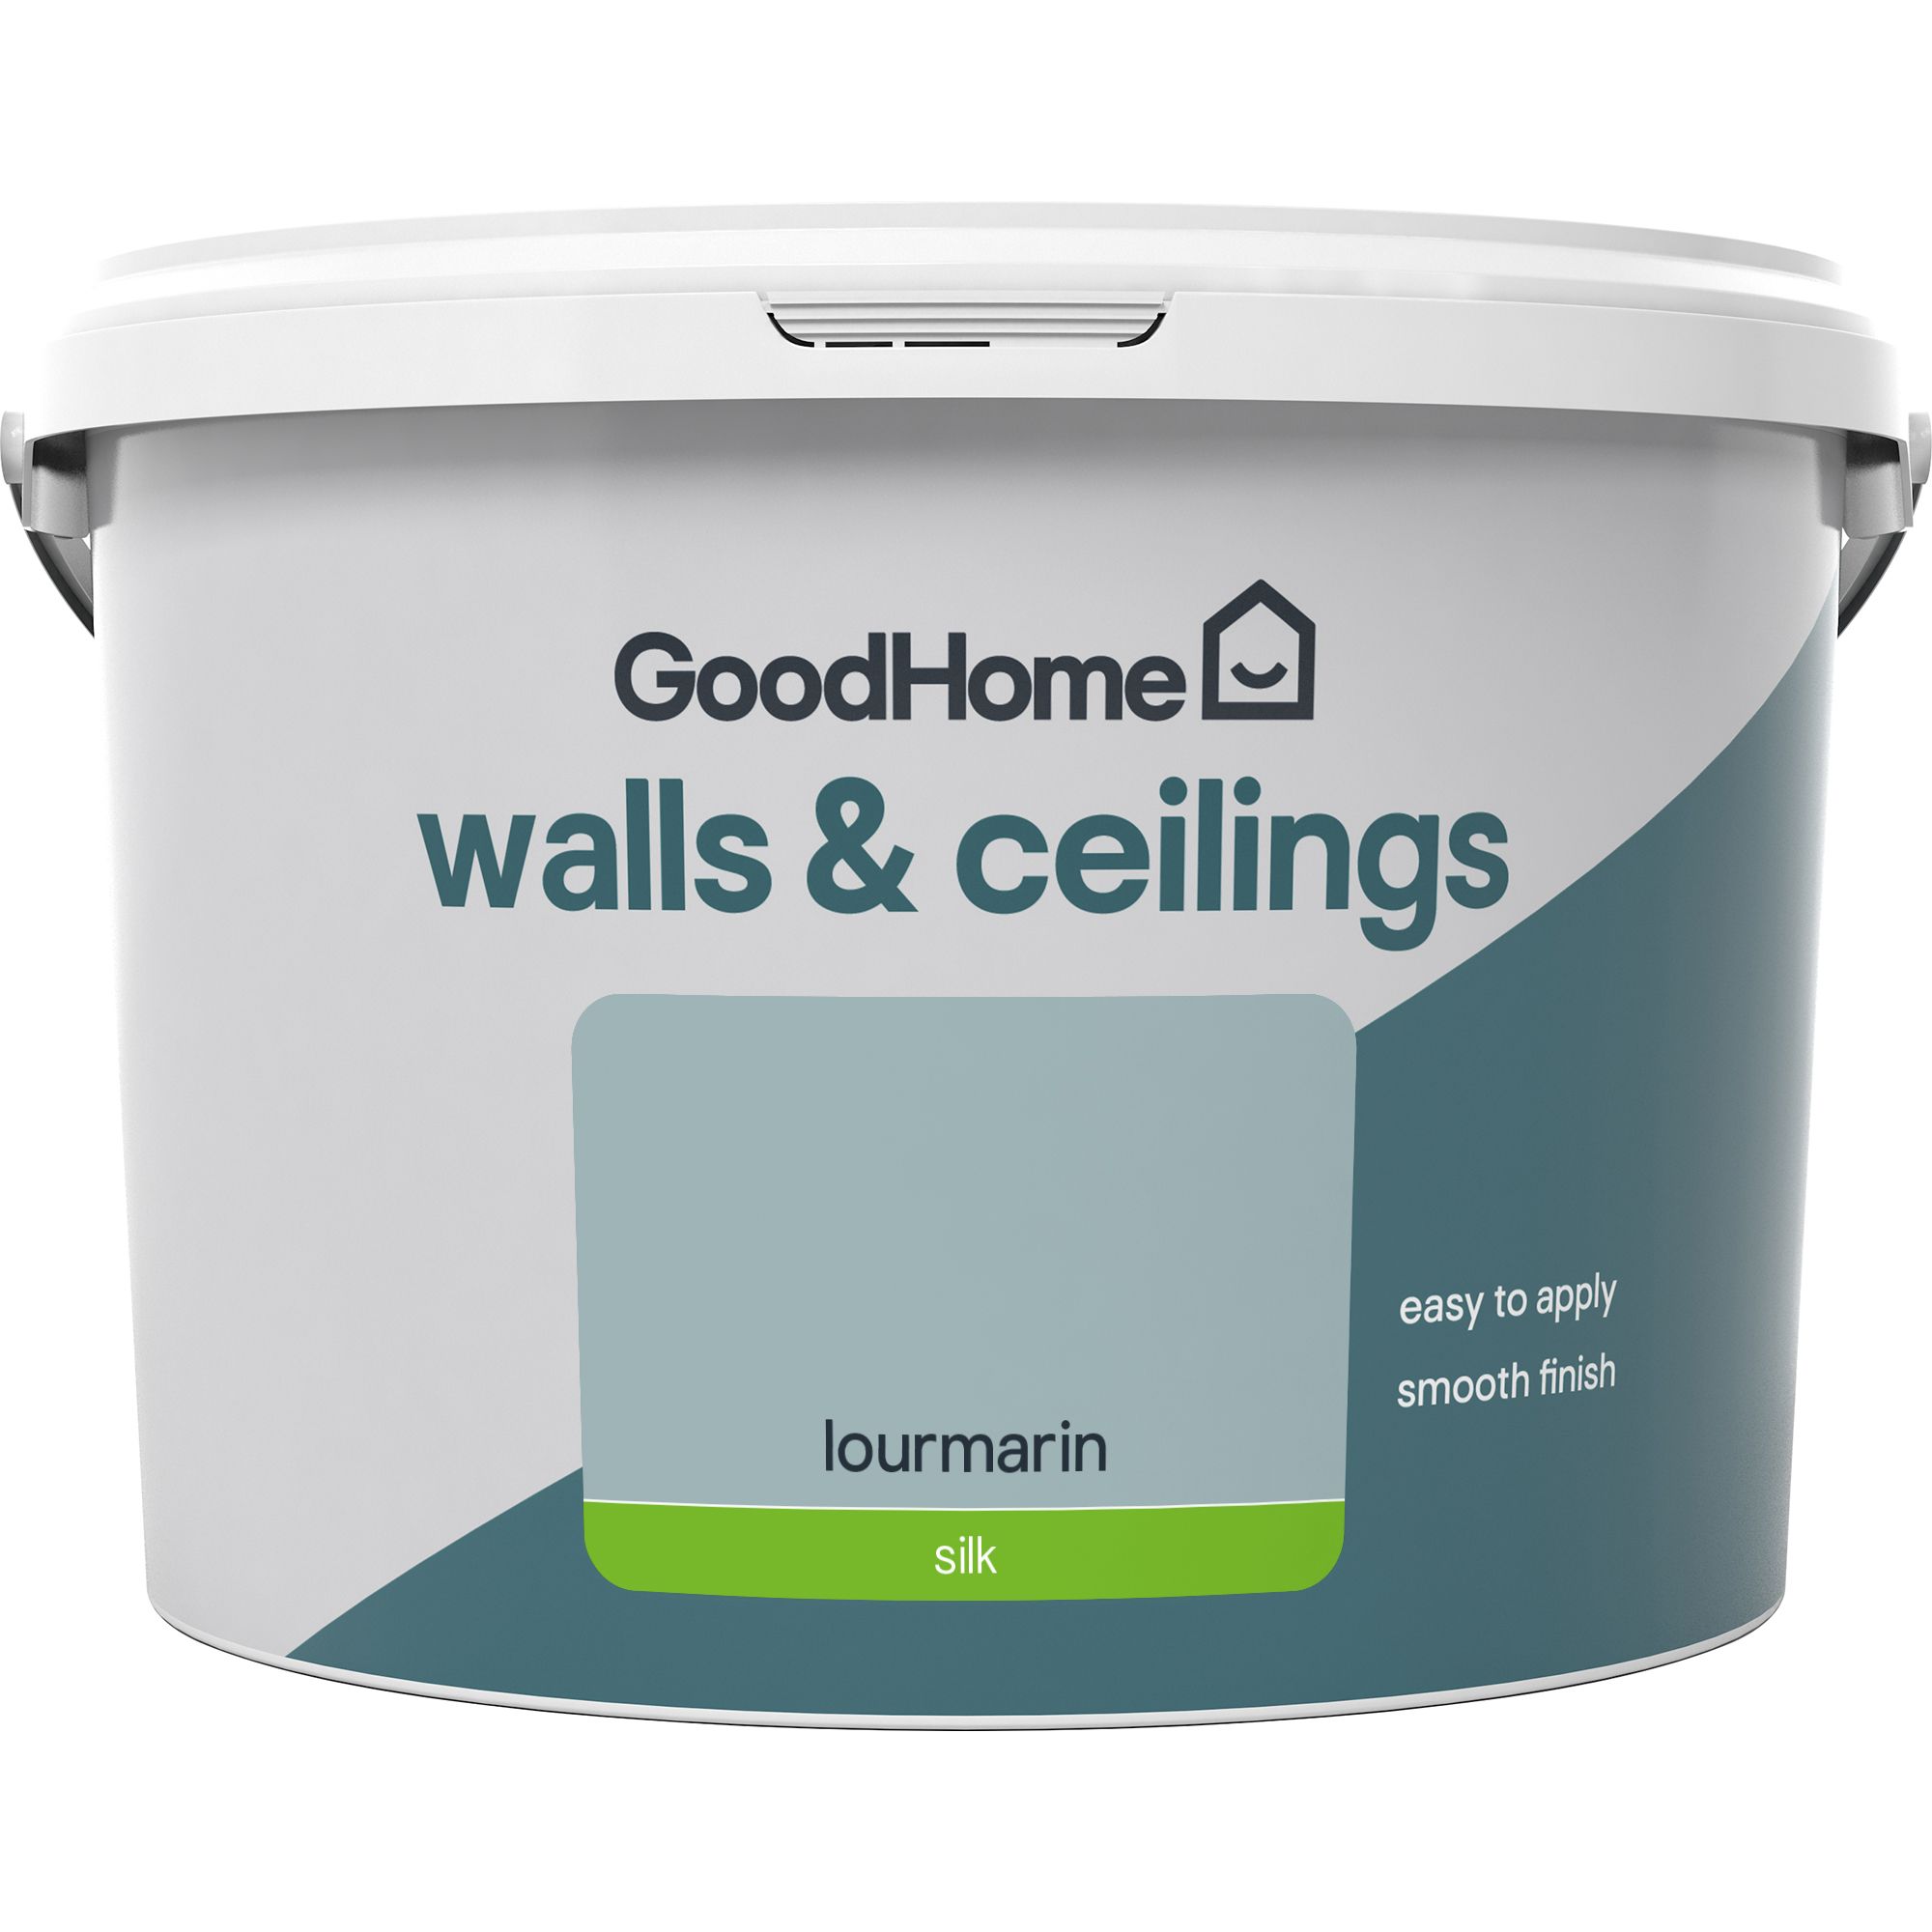 GoodHome Walls & ceilings Lourmarin Silk Emulsion paint, 2.5L